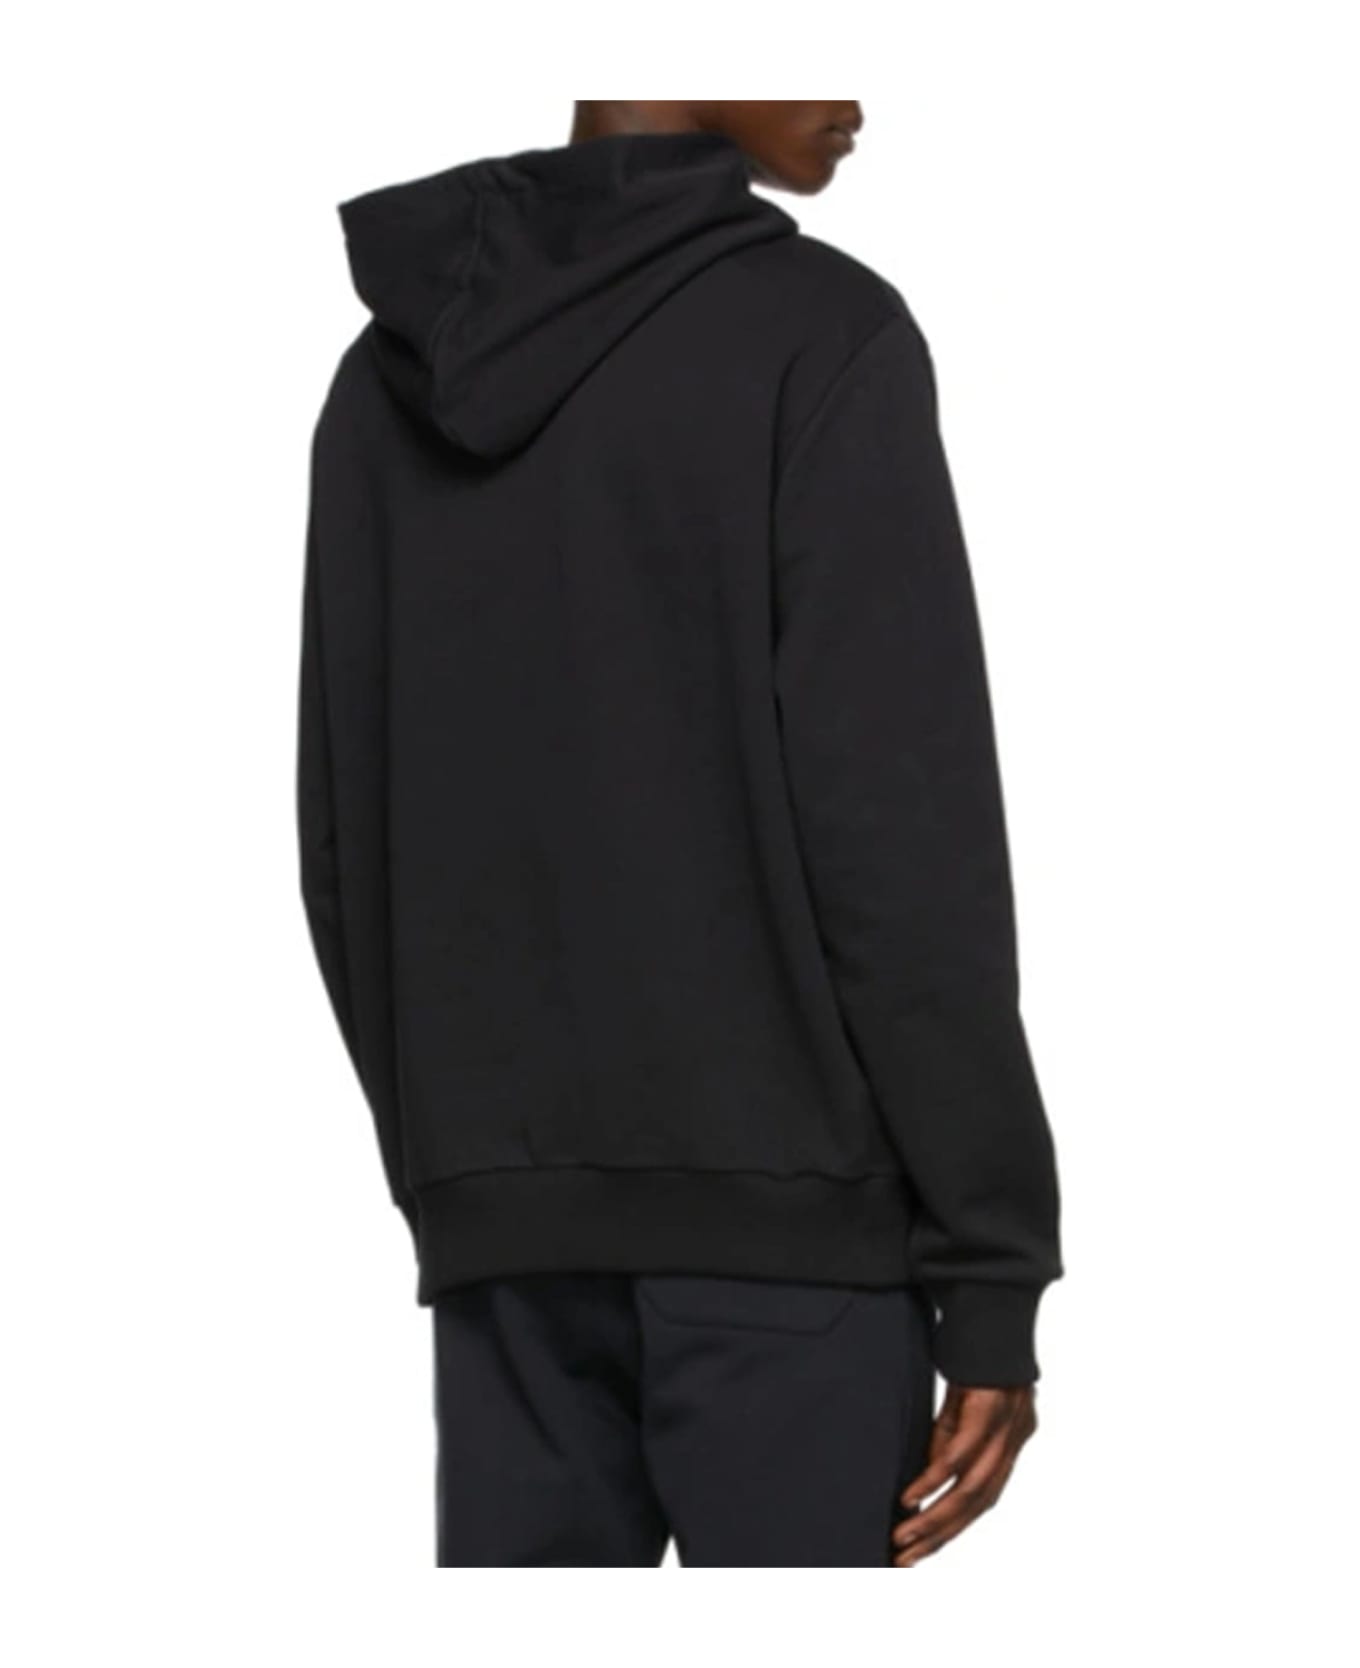 Balmain Logo Hooded Sweatshirt - Black